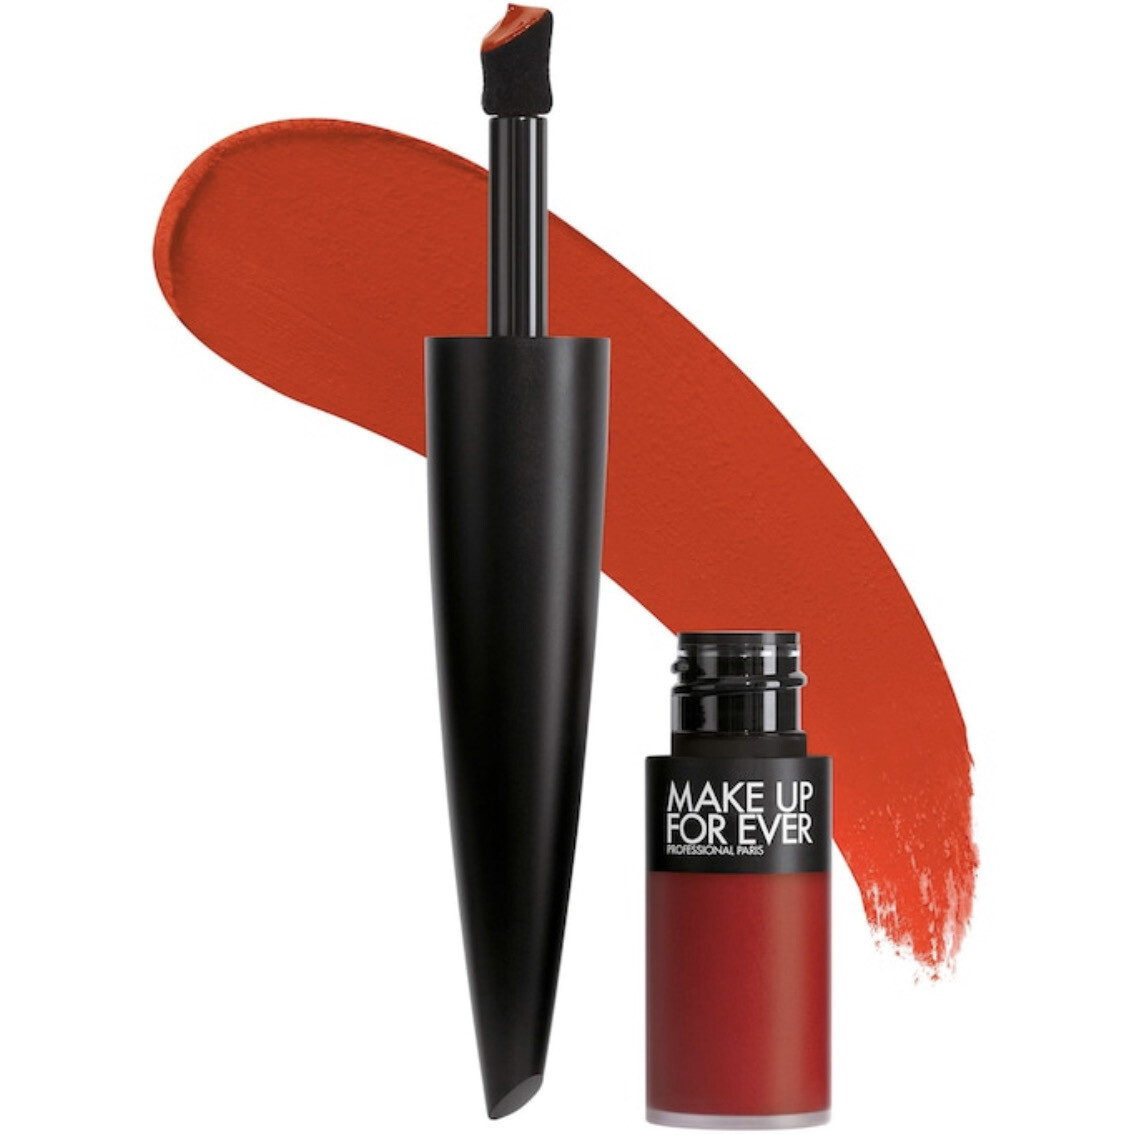 Make Up For Ever - Rouge Artist For Ever Matte 24HR Longwear Liquid Lipstick | 442 Everlasting Scarlet - crimson red